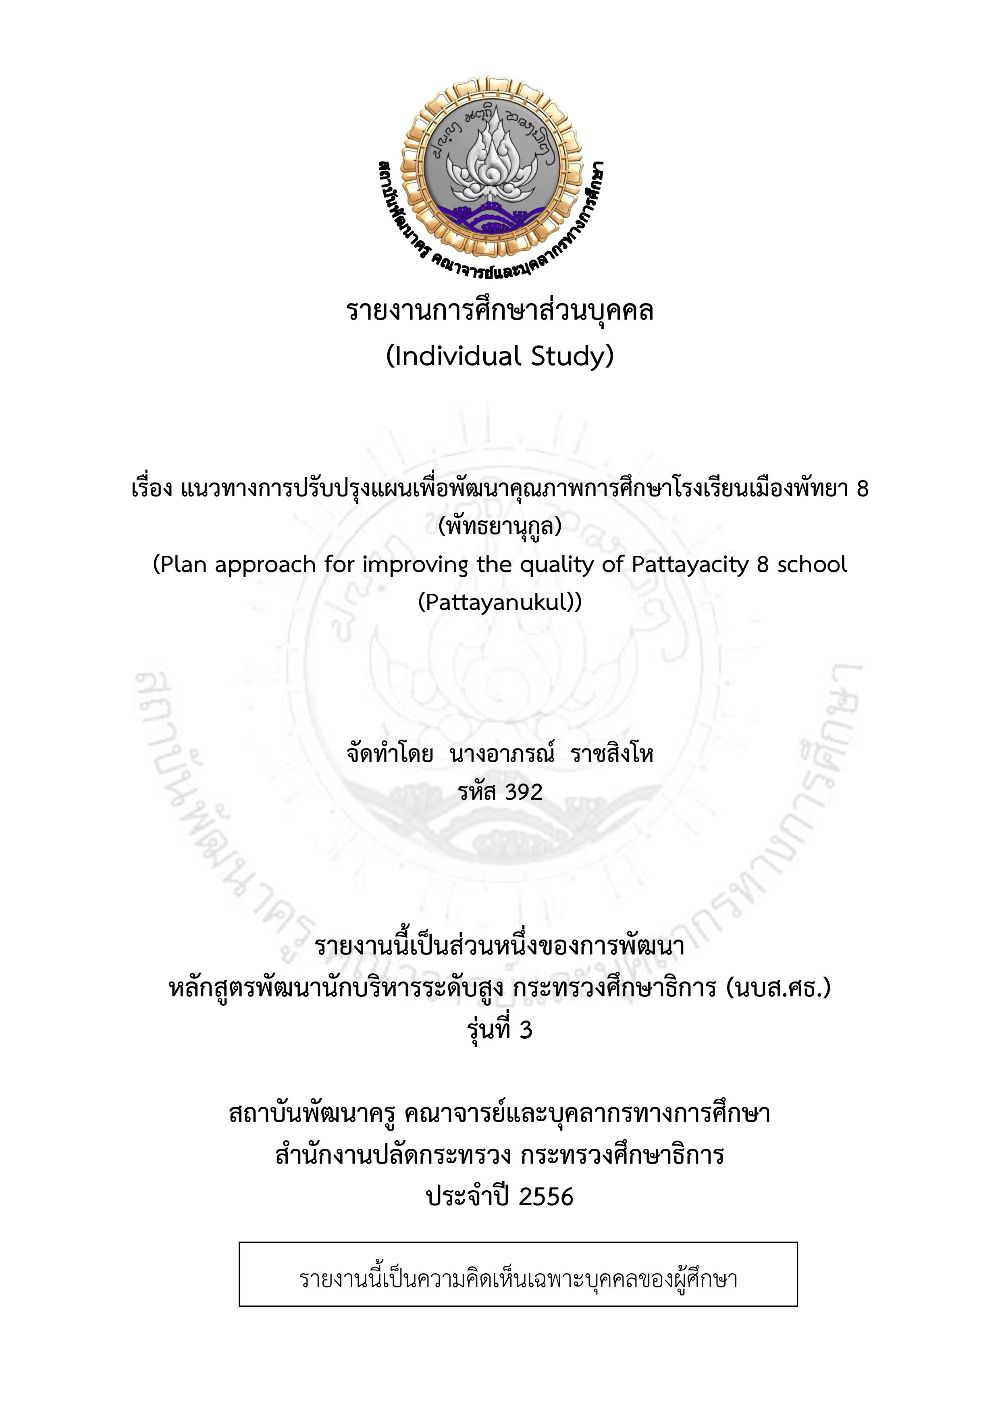 E-Book แนวทางการปรับปรุงแผนเพื่อพัฒนาคุณภาพการศึกษาโรงเรียนเมืองพัทยา 8 (พัทธยานุกูล) (Plan approach for improving the quality of Pattayacity 8 school (Pattayanukul) : รายงานการศึกษาส่วนบุคคล (Individual Study)/ อาภรณ์ ราชสิงโห